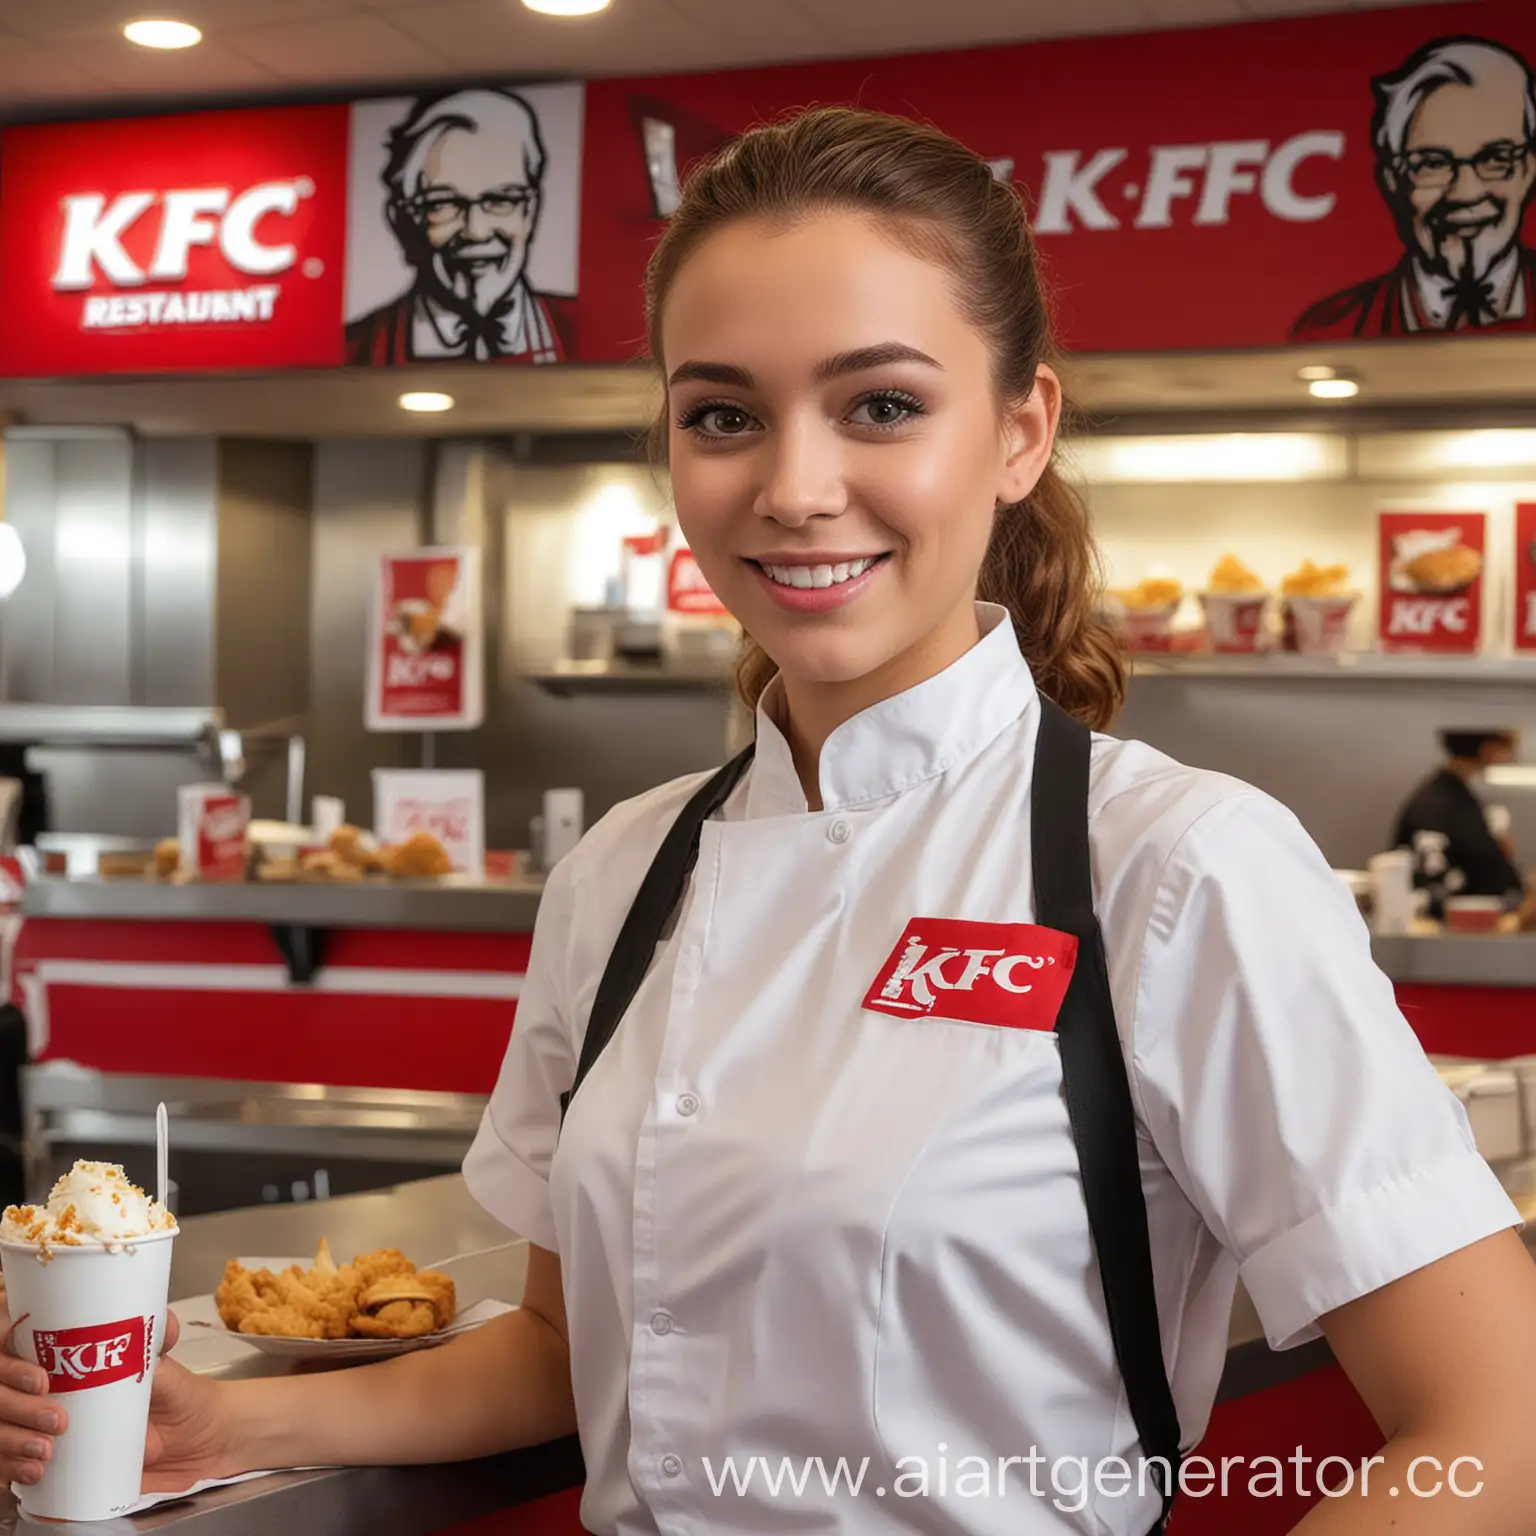 KFC-Restaurant-Employee-Serving-Fried-Chicken-Meals